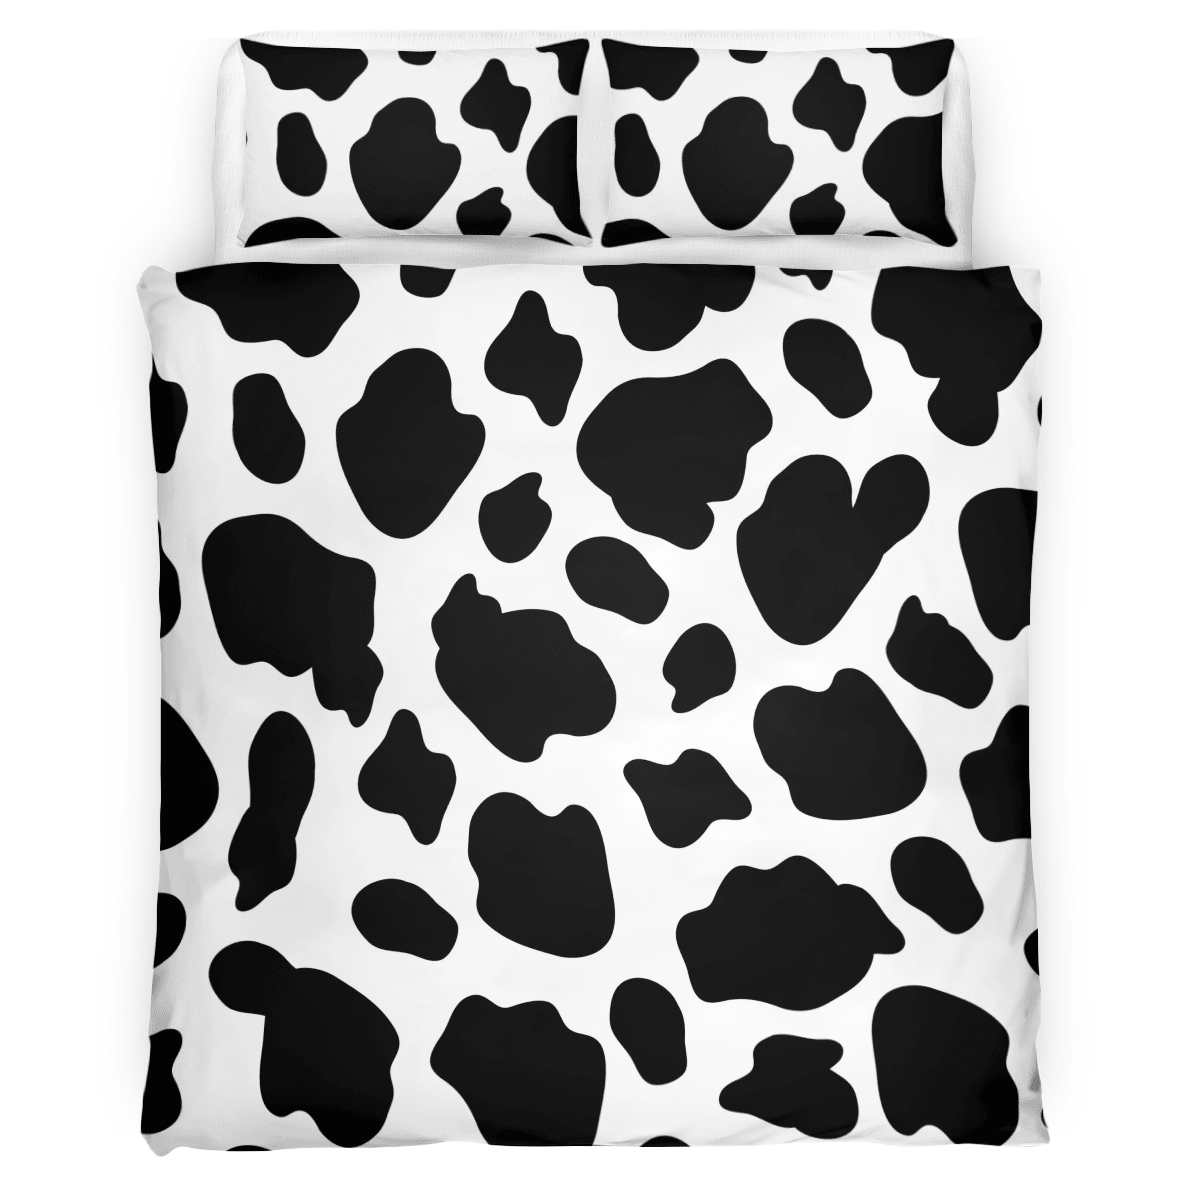 Cow Bedding Set